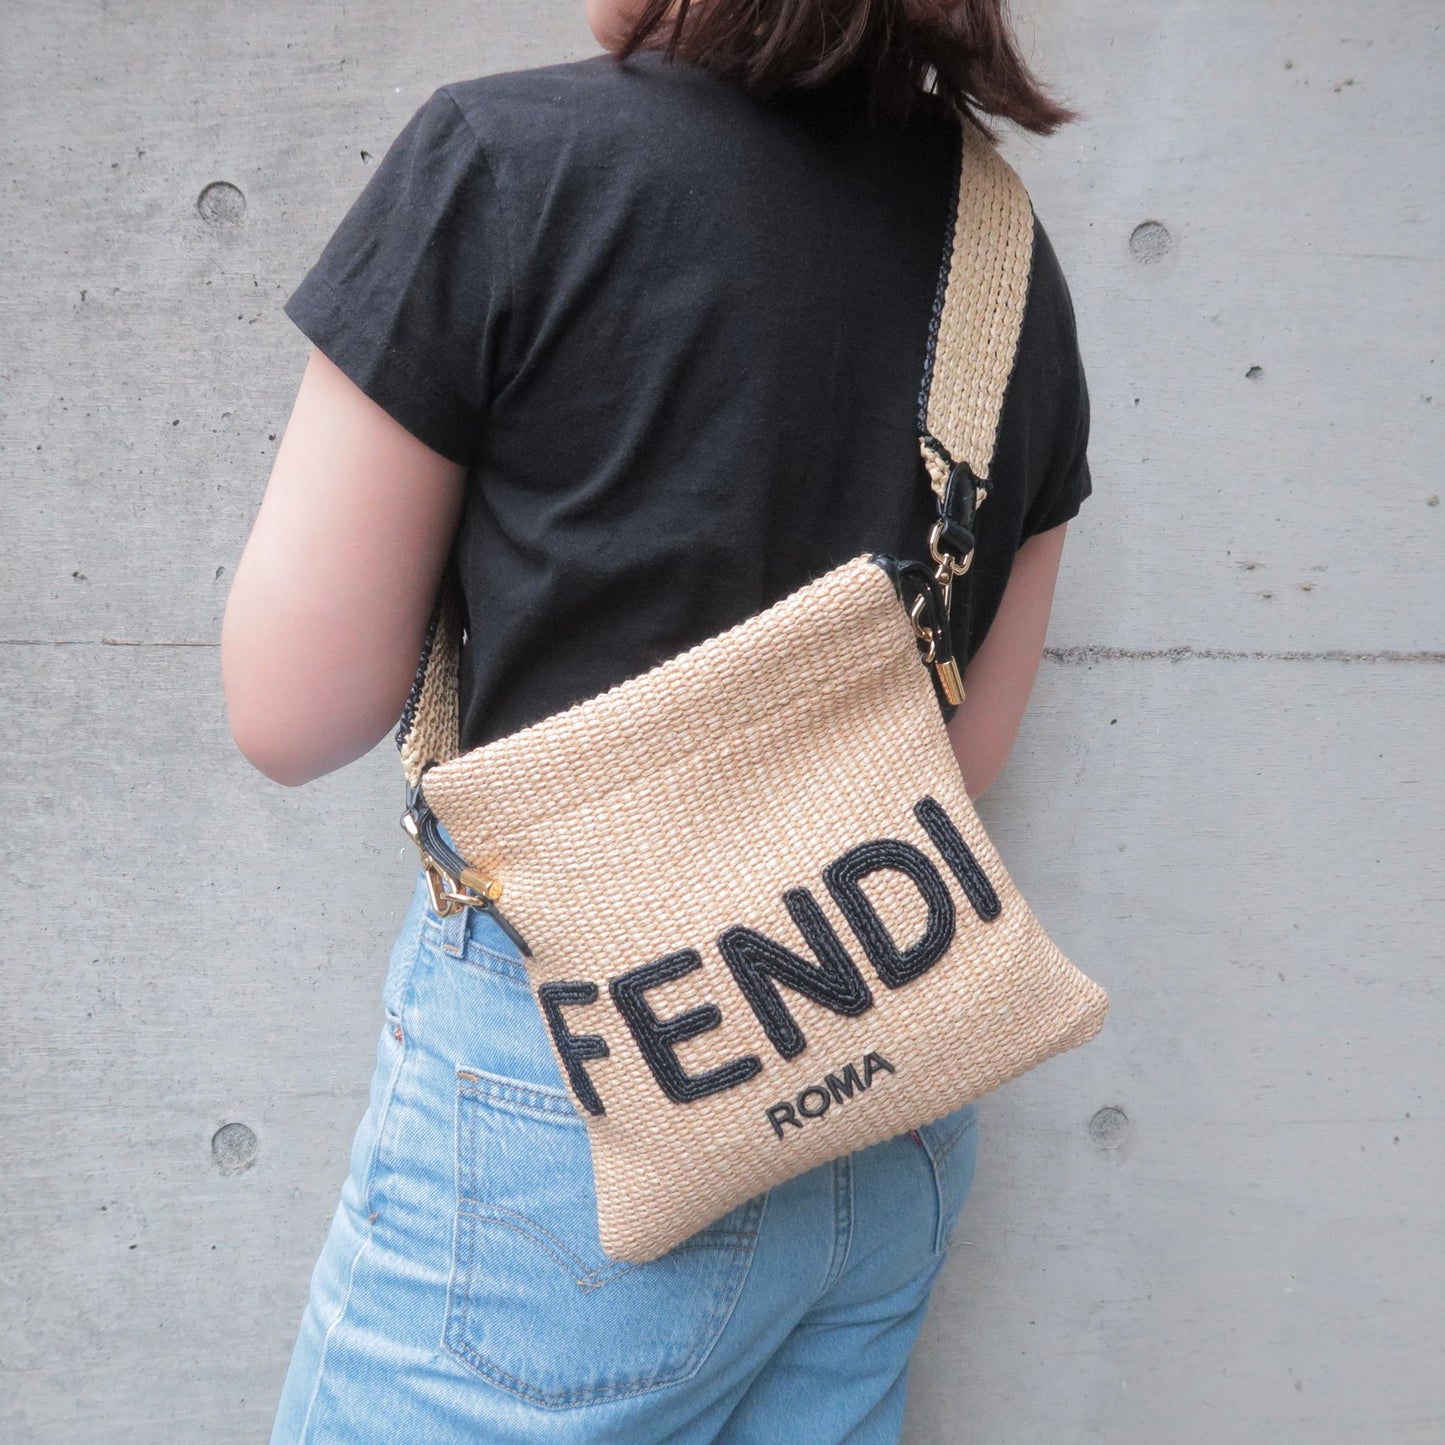 Fendi Straw Purse, Shoulder Bag. Black with Gold Studs